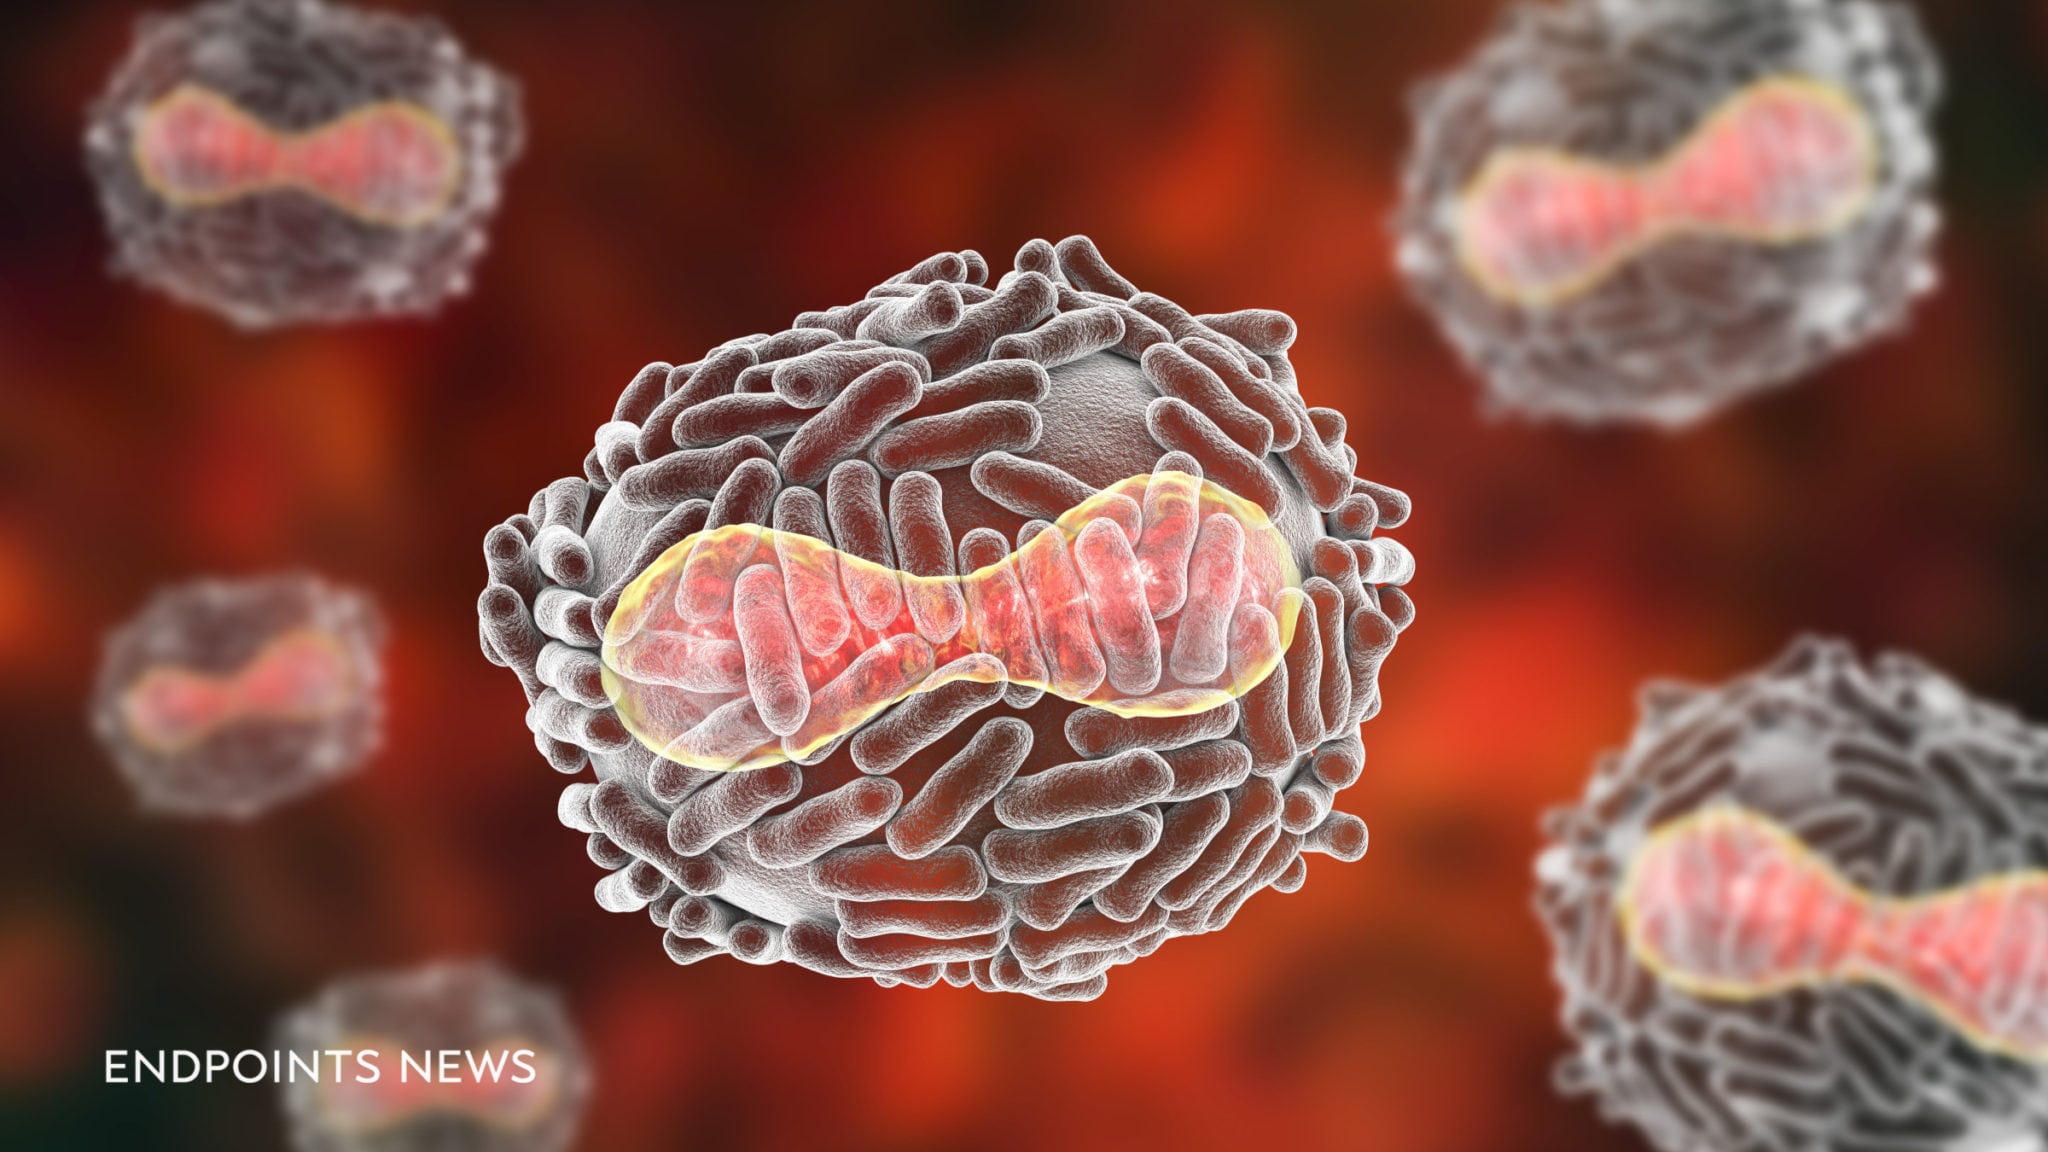 Guarding against a nightmare scenario, FDA approves new drug to counter smallpox ...